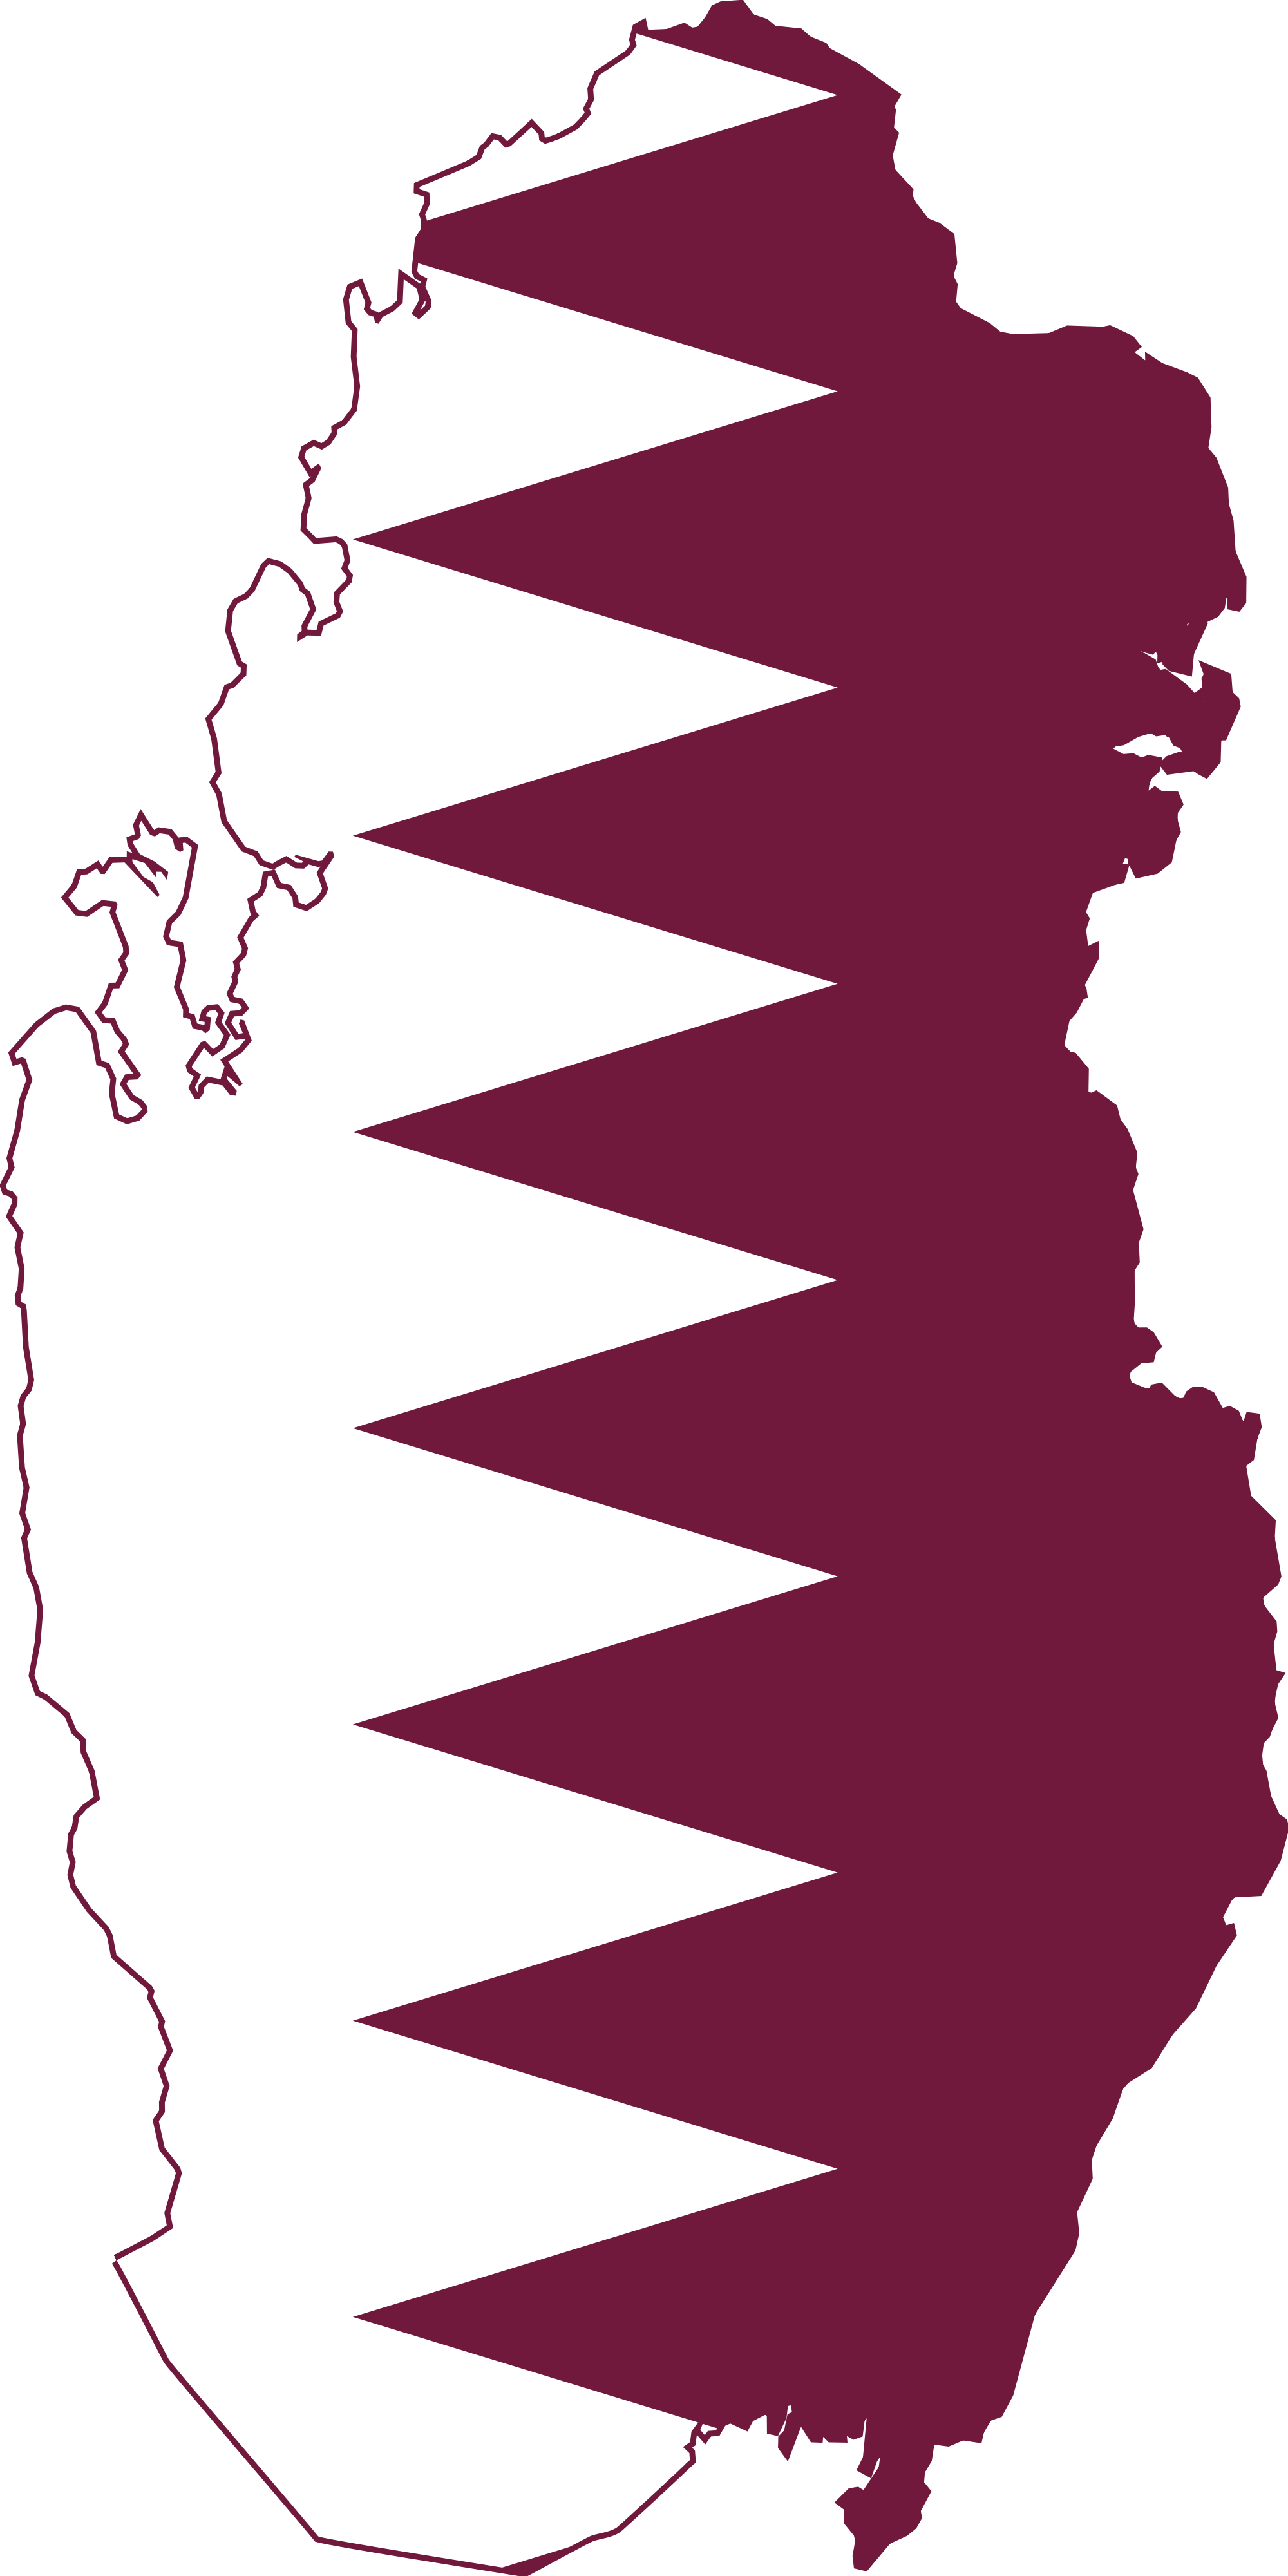 Qatar Flag PNG Image Background